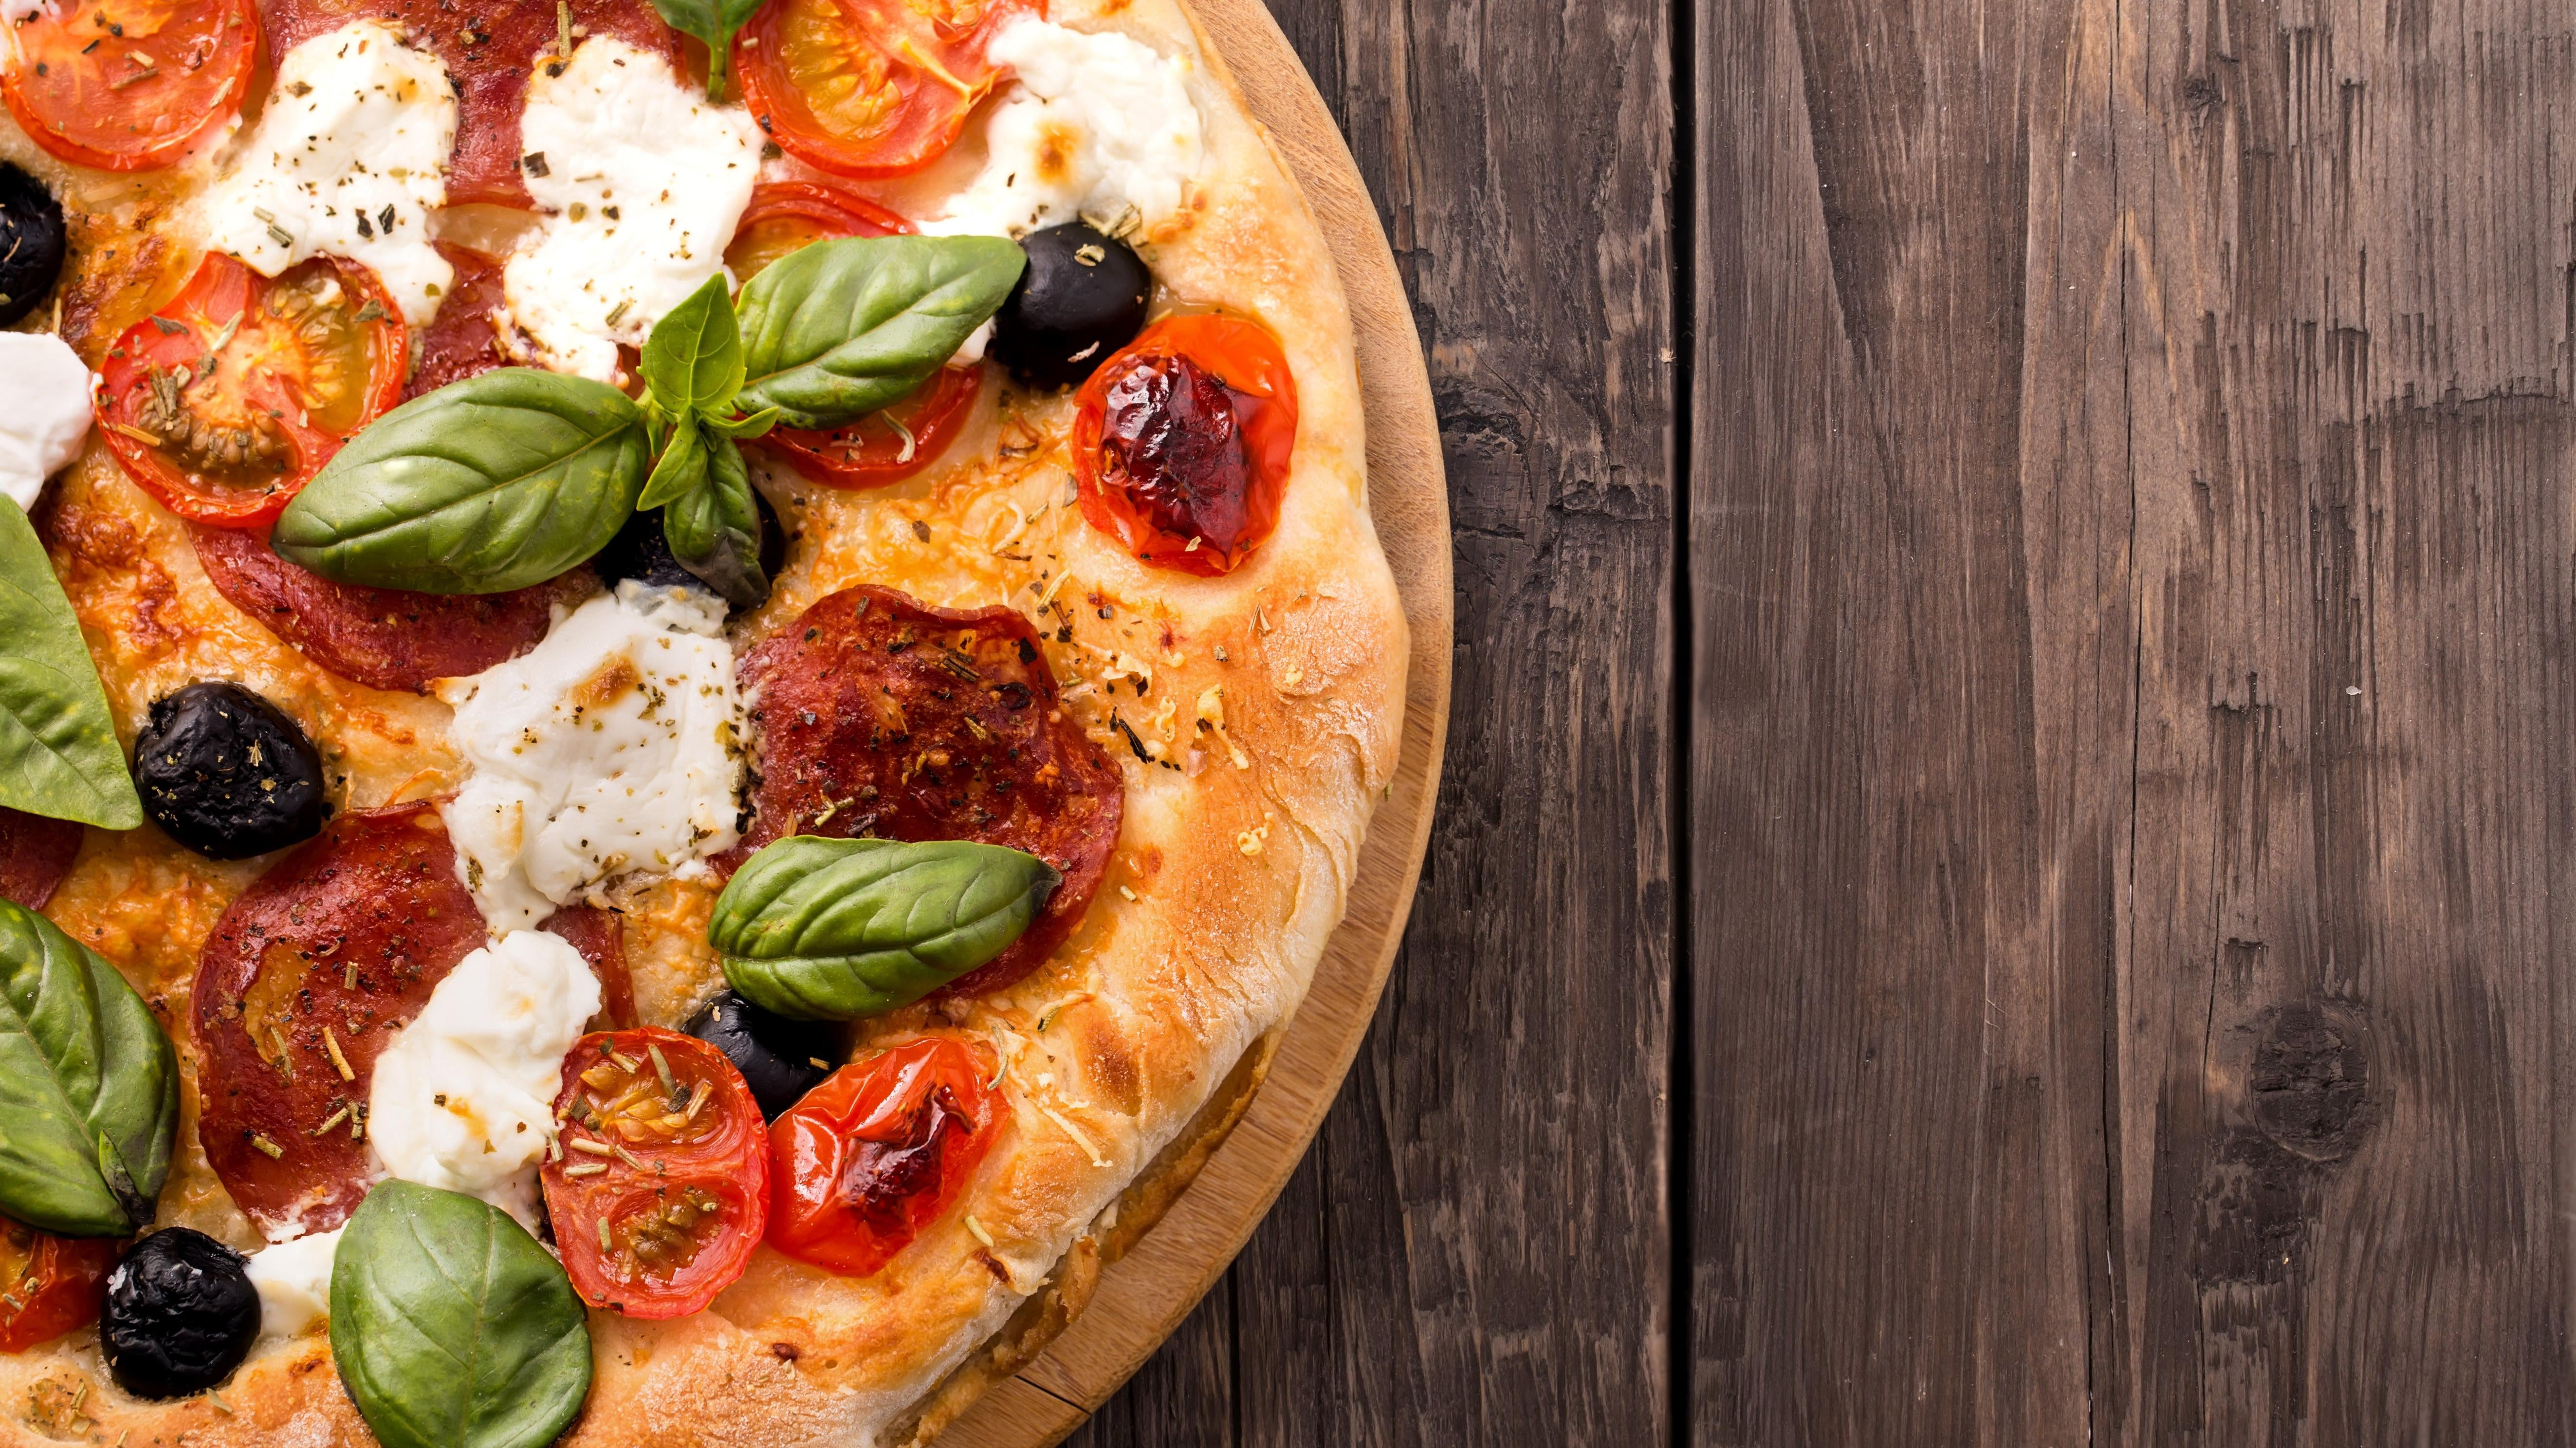 11 Ways to Make a Frozen Pizza Less Sad